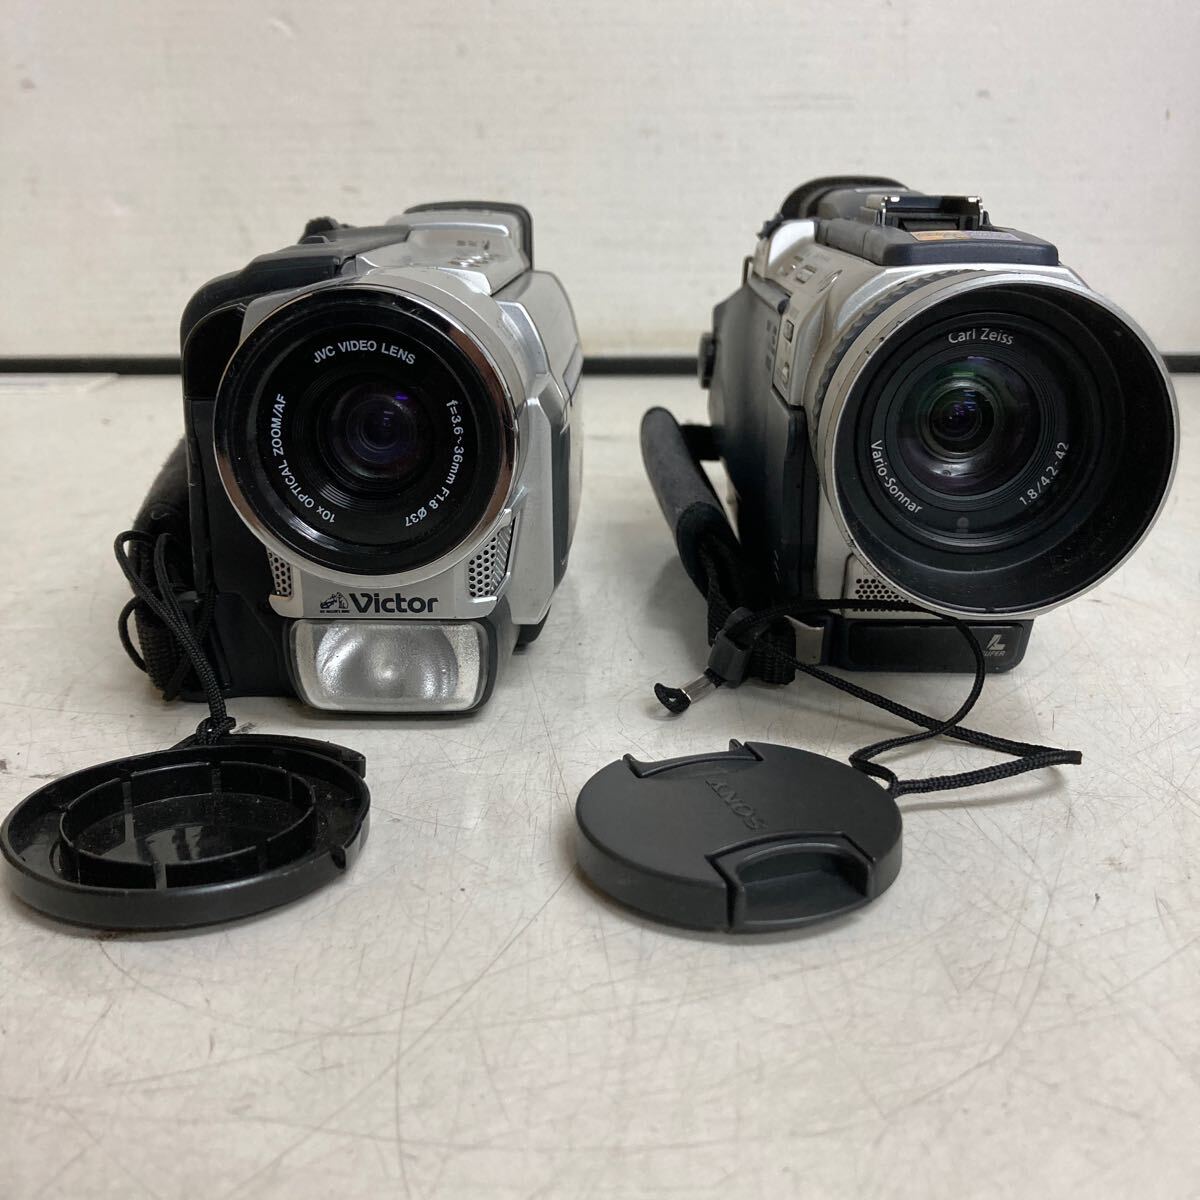 L002 ビデオカメラ9台/8mmカメラ 1台/ 合わせて10台まとめて/SONY Victor FUJICAなど 動作未確認 ジャンク品_画像6